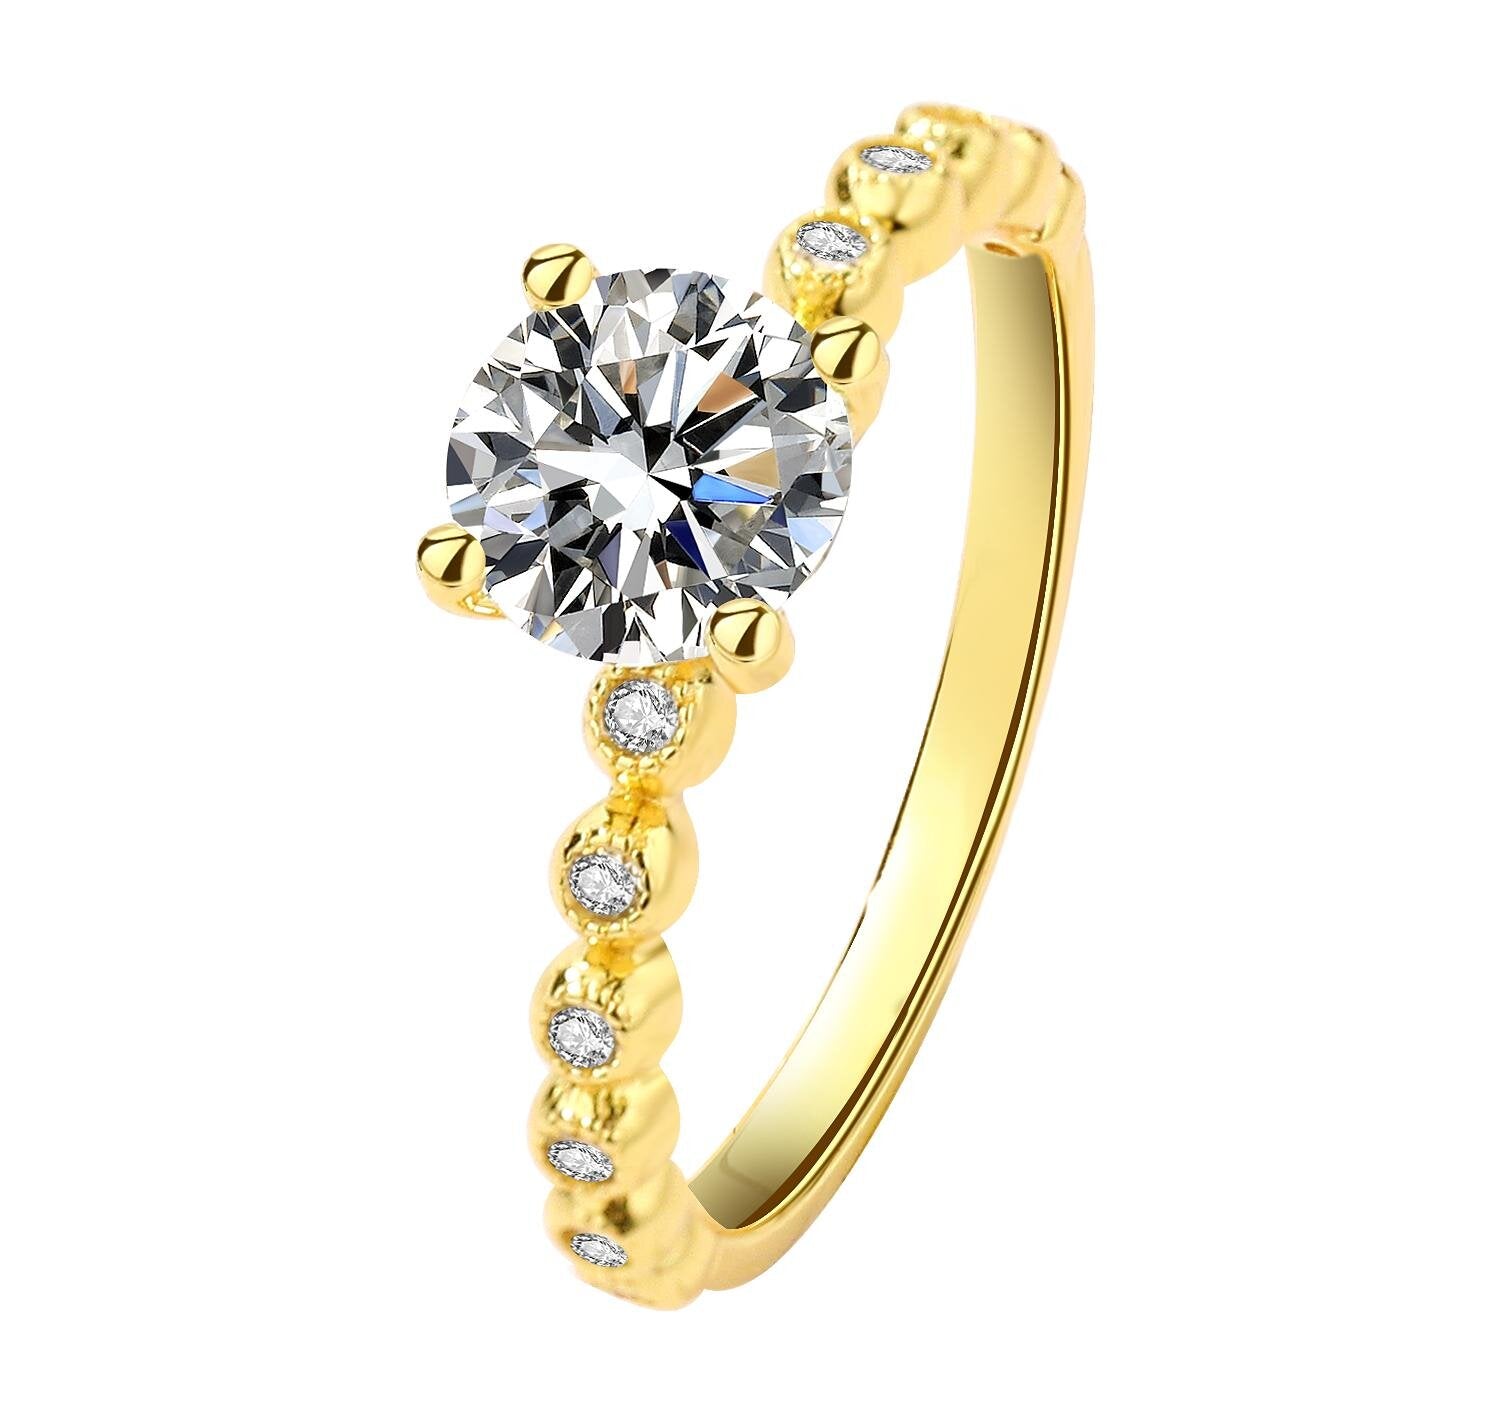 The Tonia - 1.0 crt Moissanite Diamond Ring